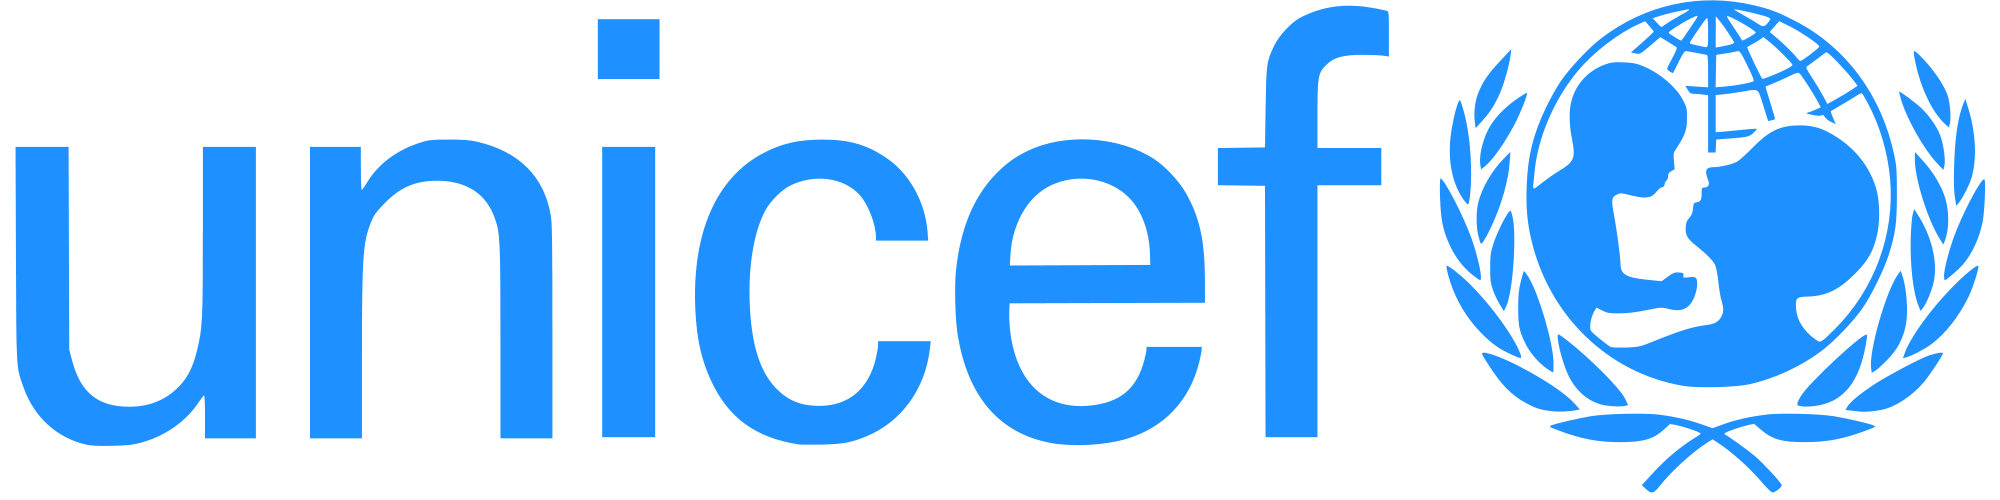 Unicef_logo-5.png